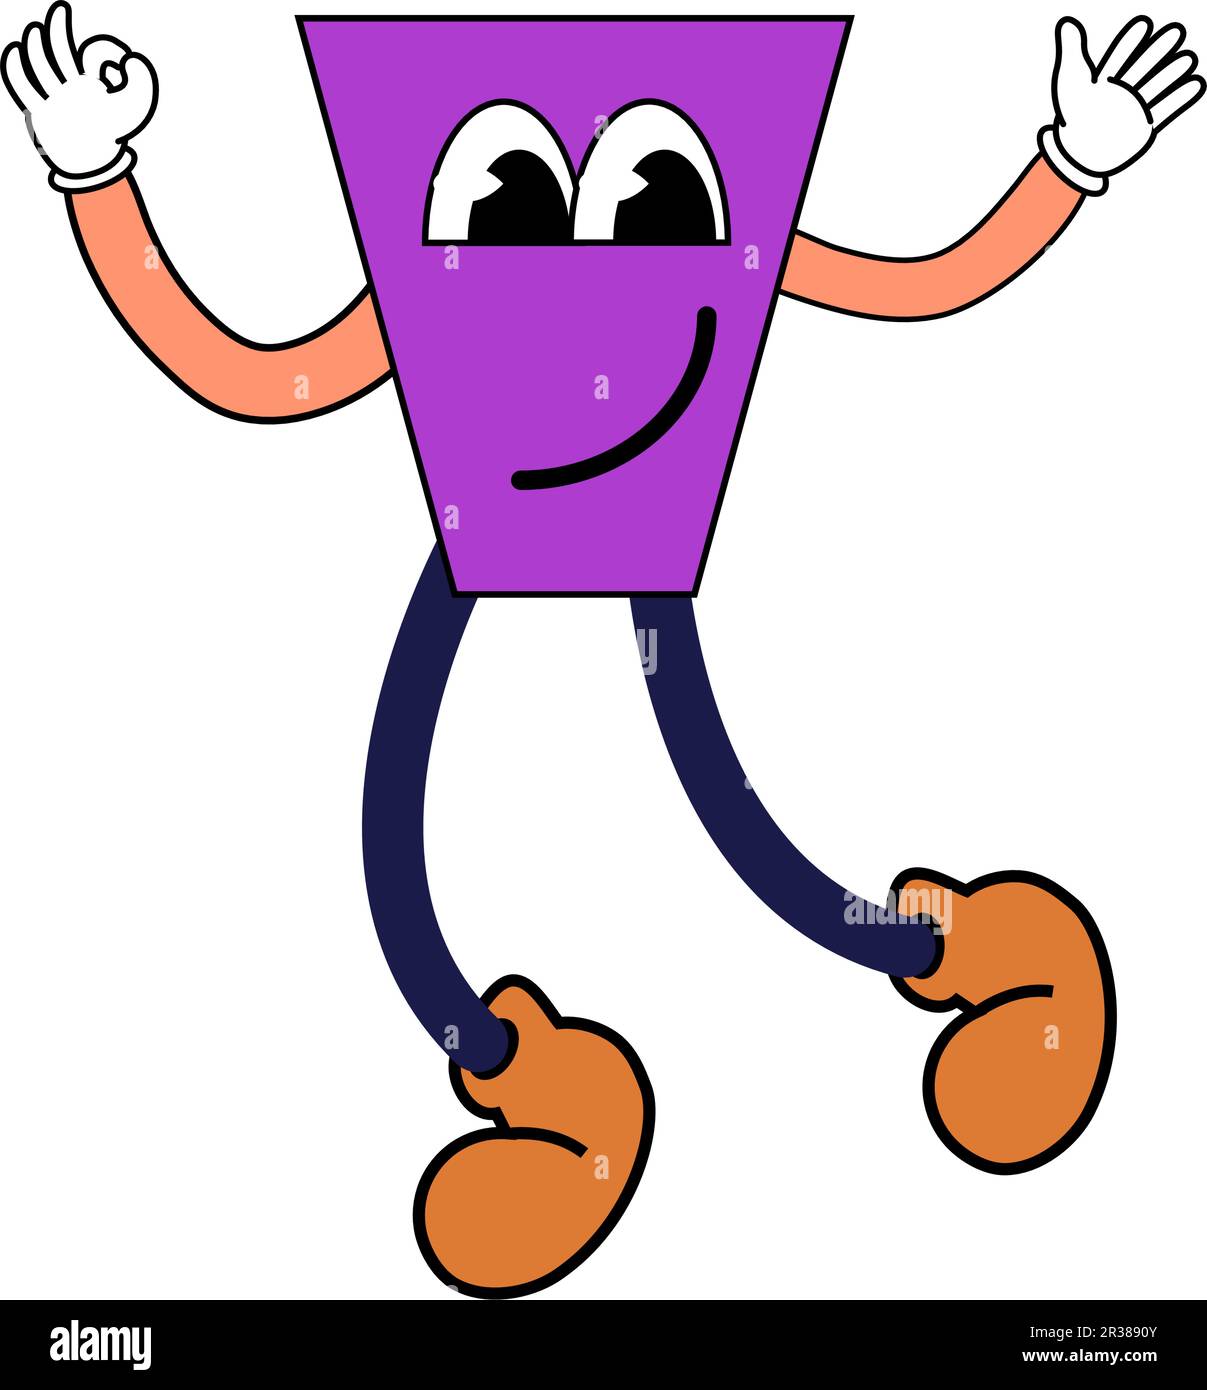 https://c8.alamy.com/comp/2R3890Y/cartoon-groovy-funny-cartoon-smile-character-vintage-funky-comic-bright-emoticon-geometric-shape-purple-sticker-2R3890Y.jpg